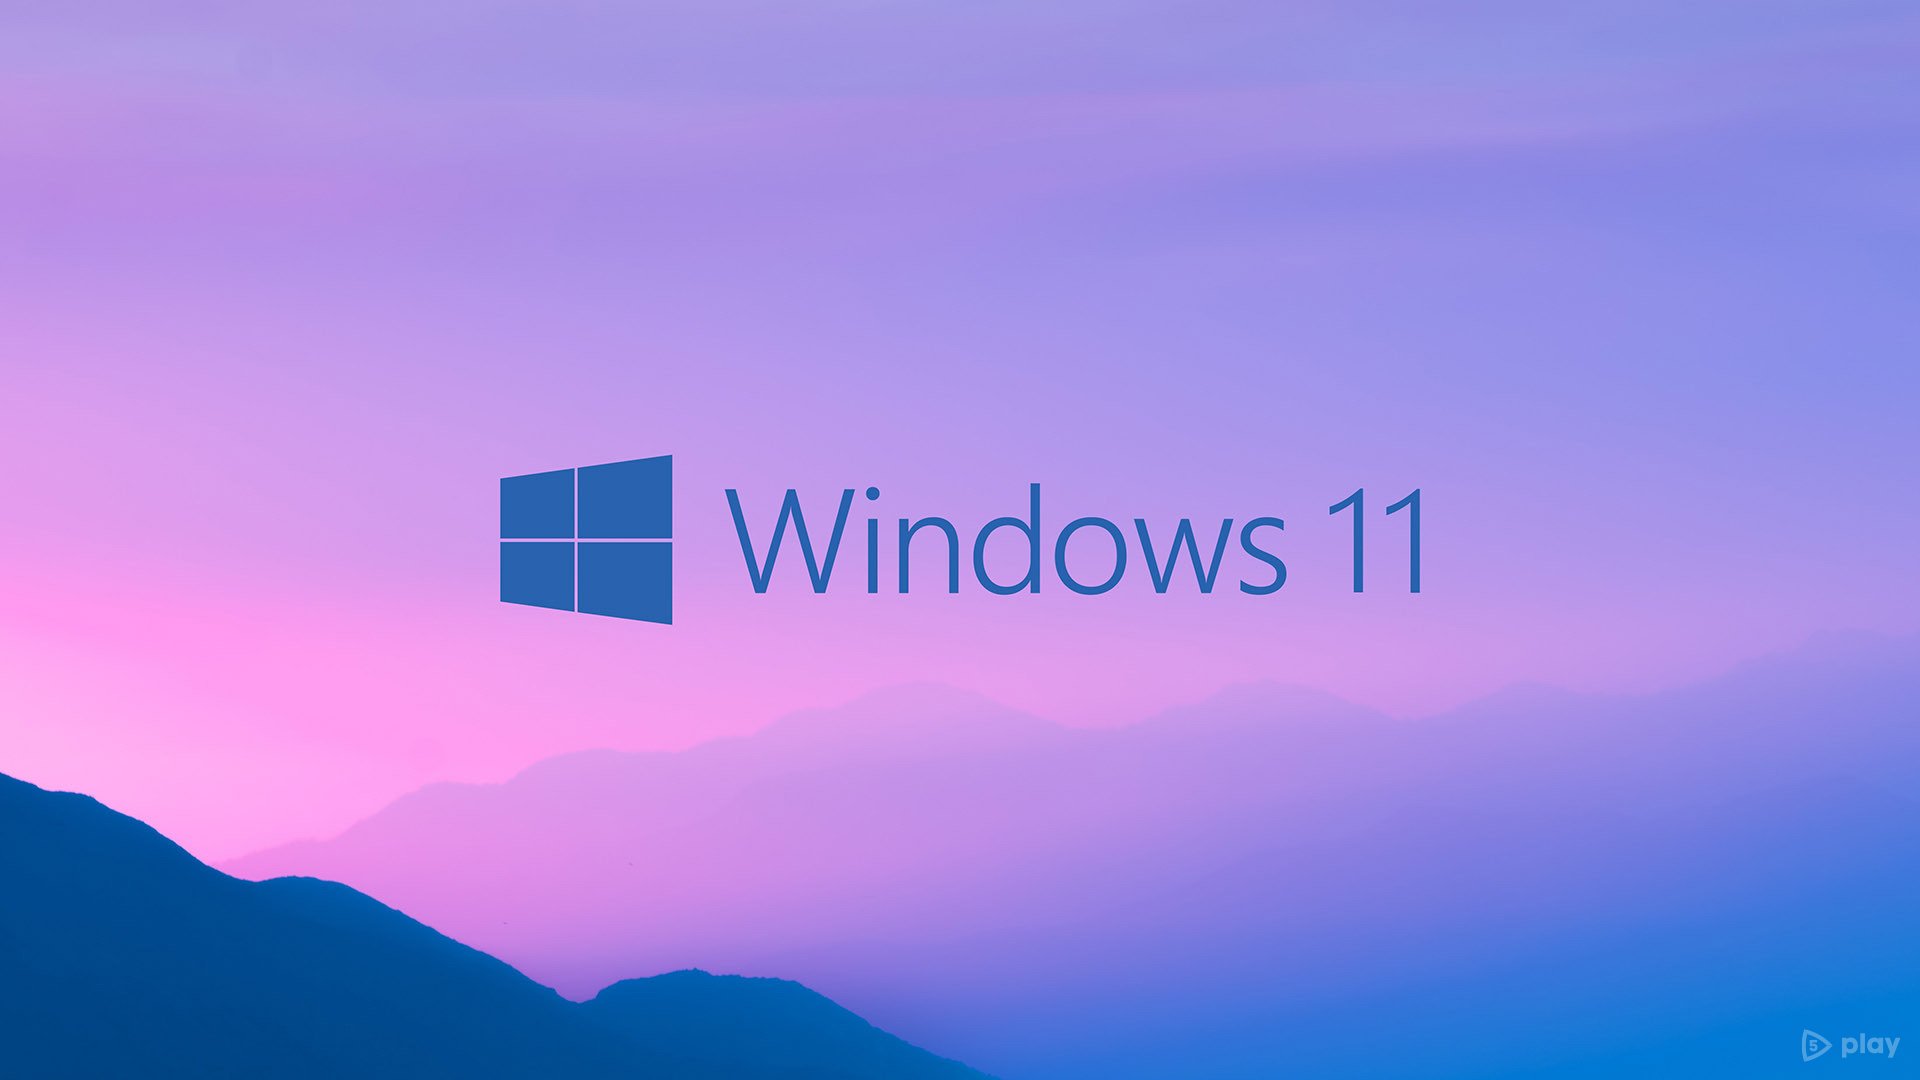 Windows 11 will support third-party app widgets